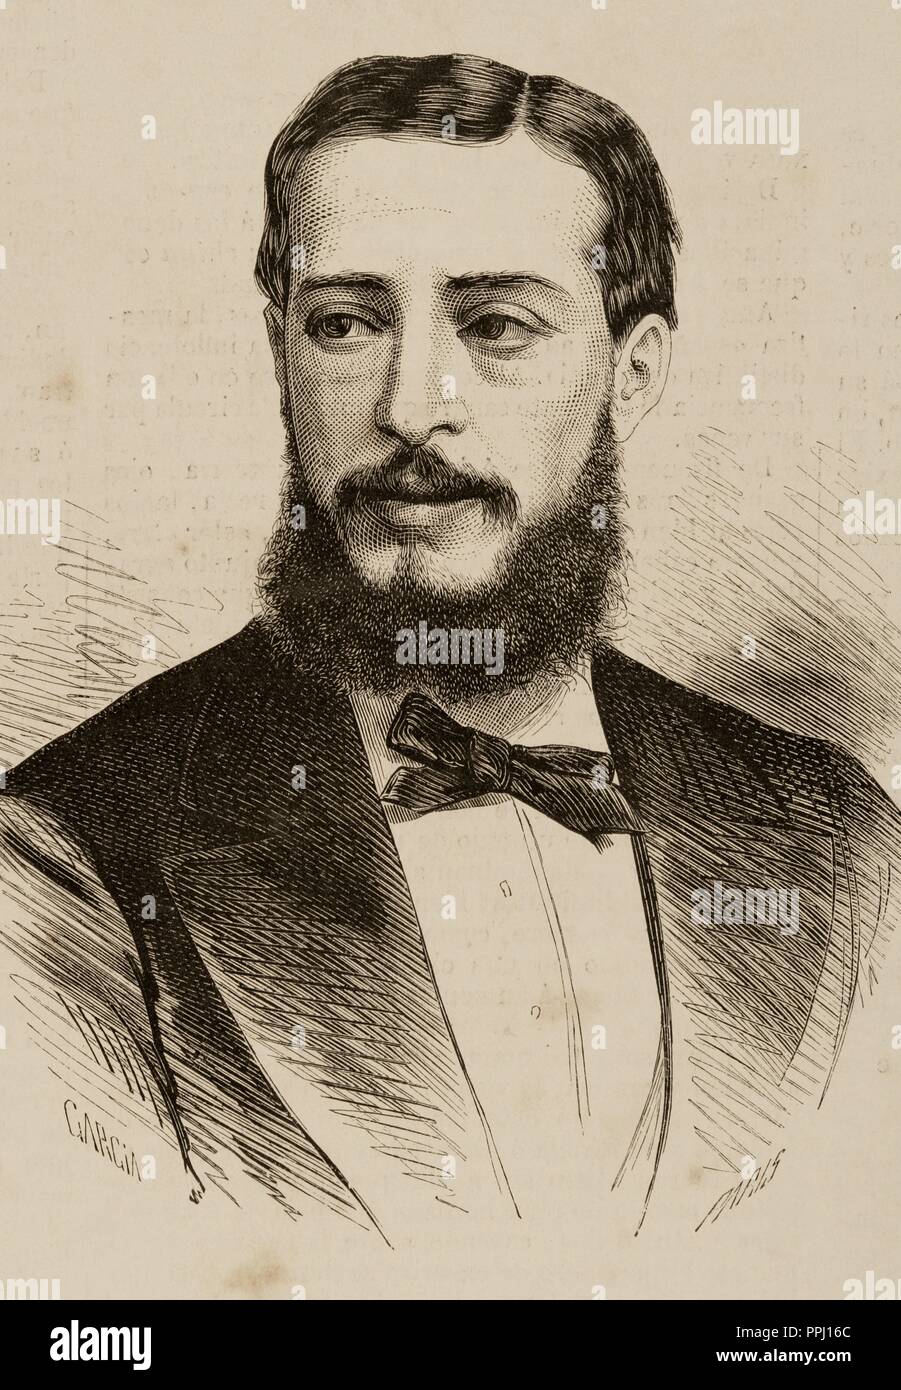 Angel Carvajal y Fernandez de Cordoba (1841-1898). Spanish politician. Engraving in The Spanish and American Illustration, 1872. Stock Photo